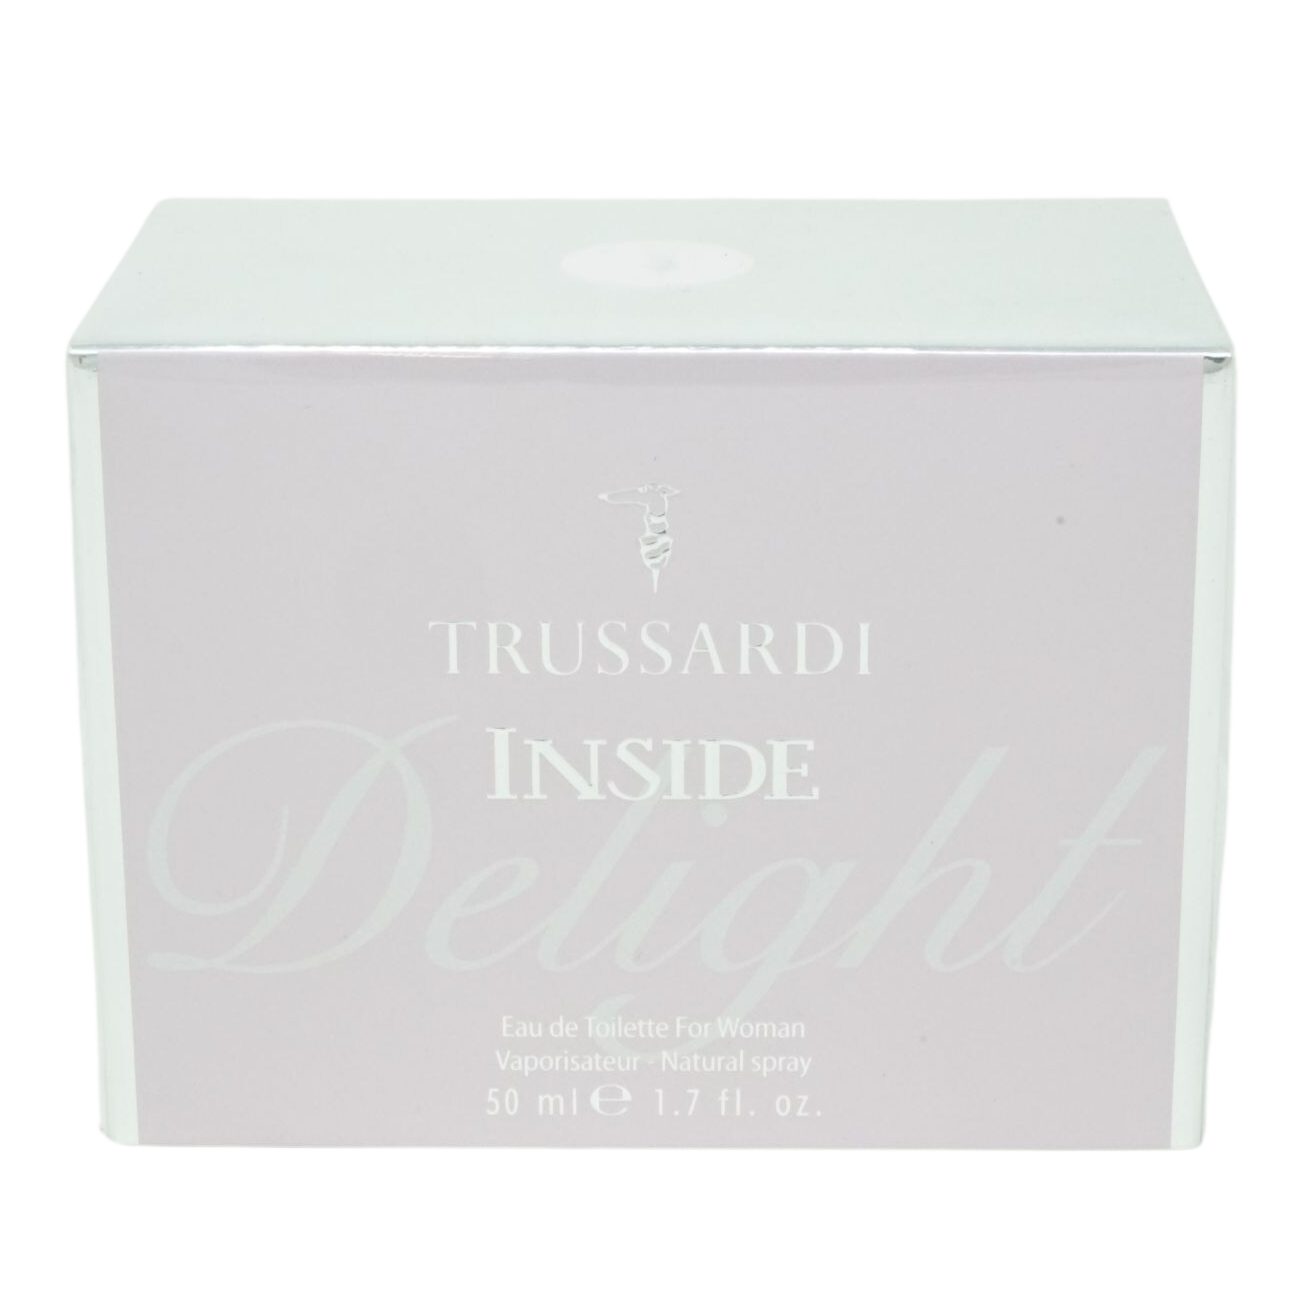 For Trussardi Woman Trussardi Delight 50ml Toilette Eau Inside de de Eau Toilette